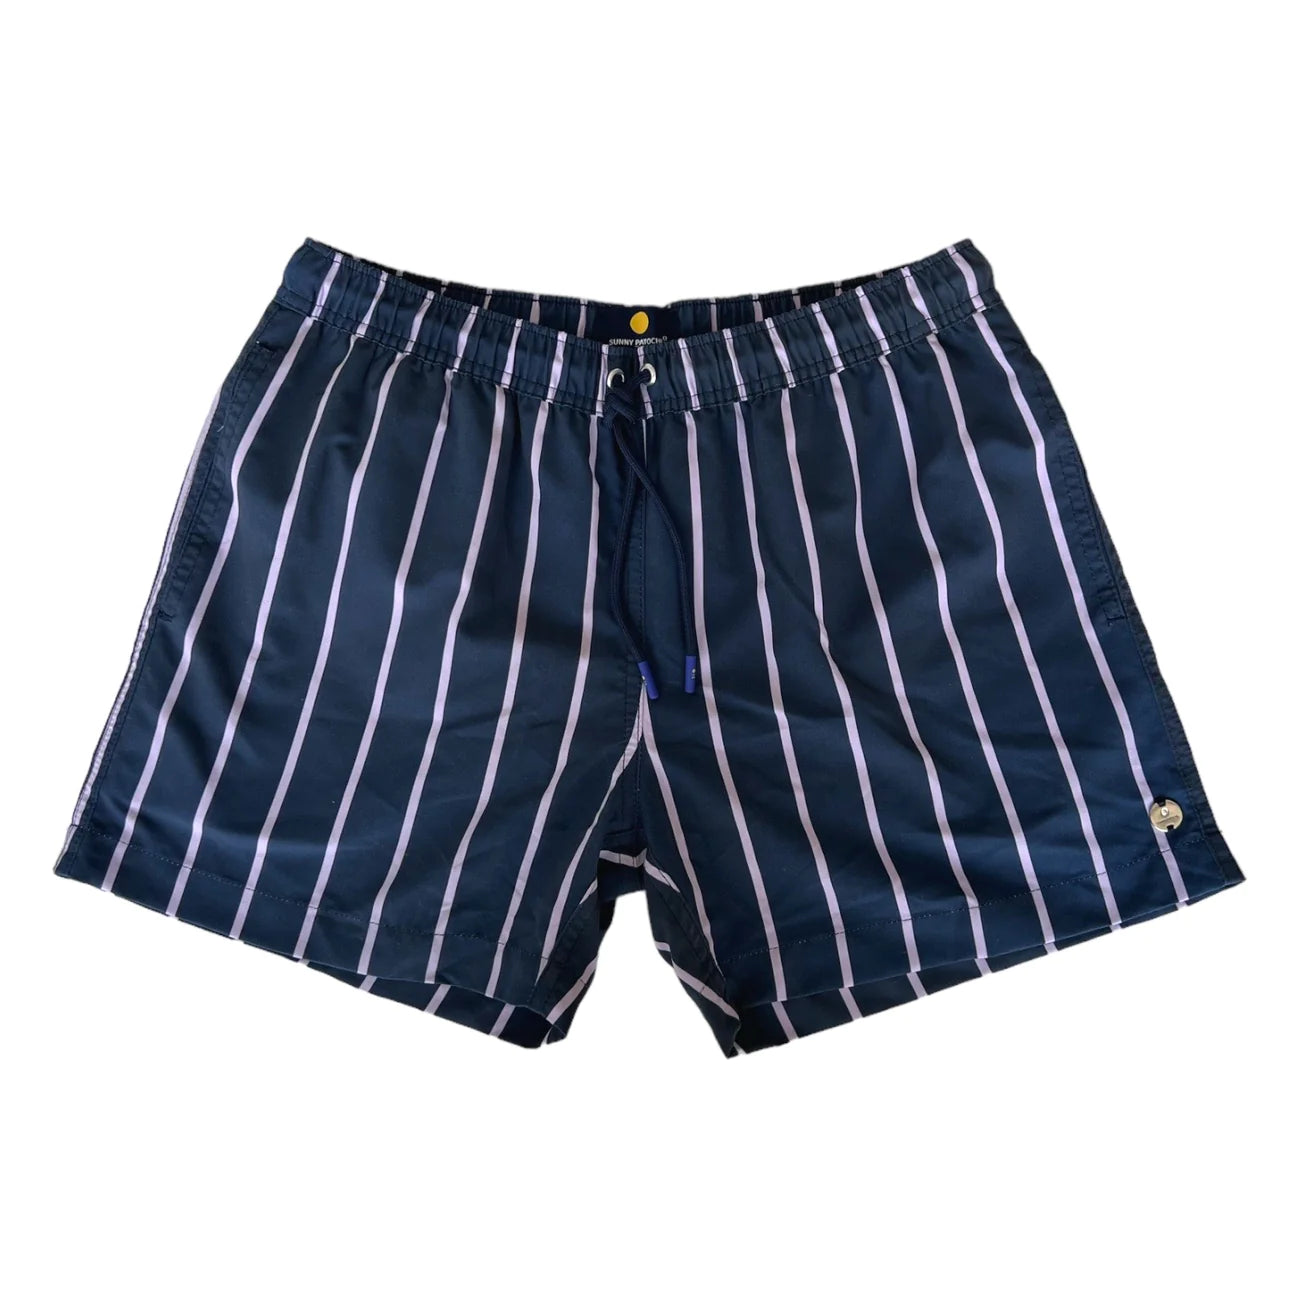 Stripped Swim Shorts